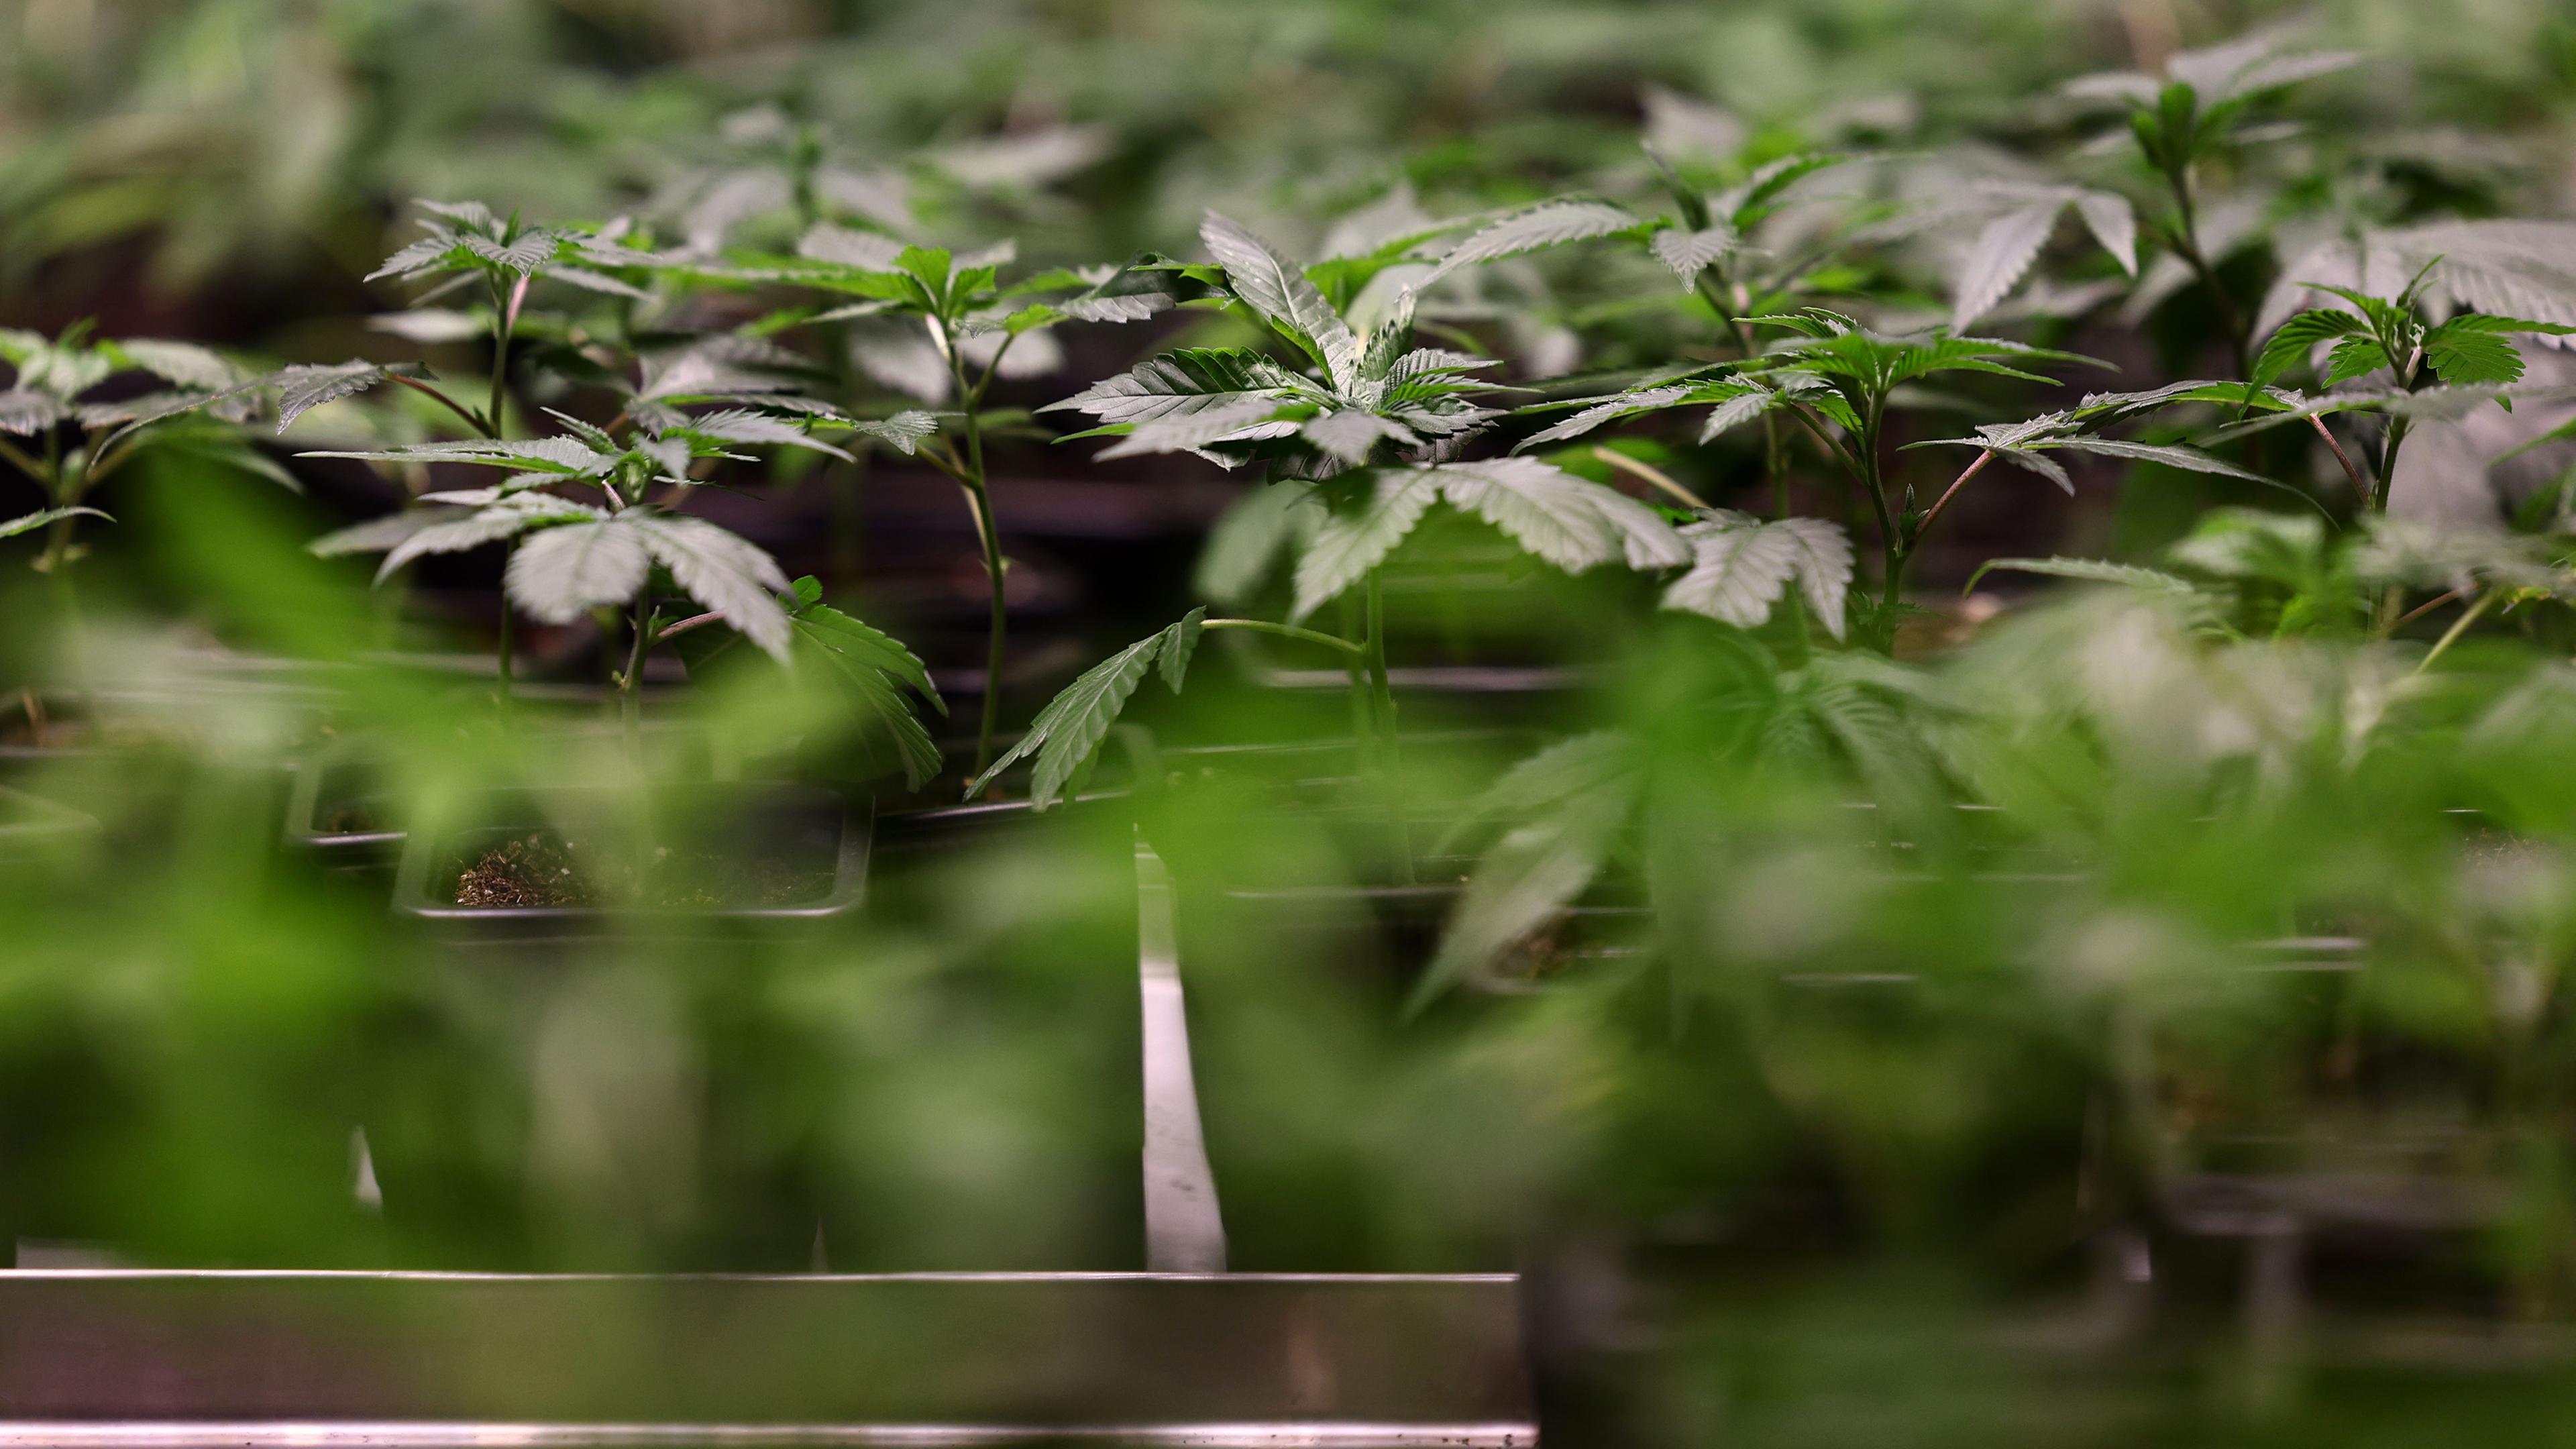 First Cannabis Club near Munich sells plants after legalization